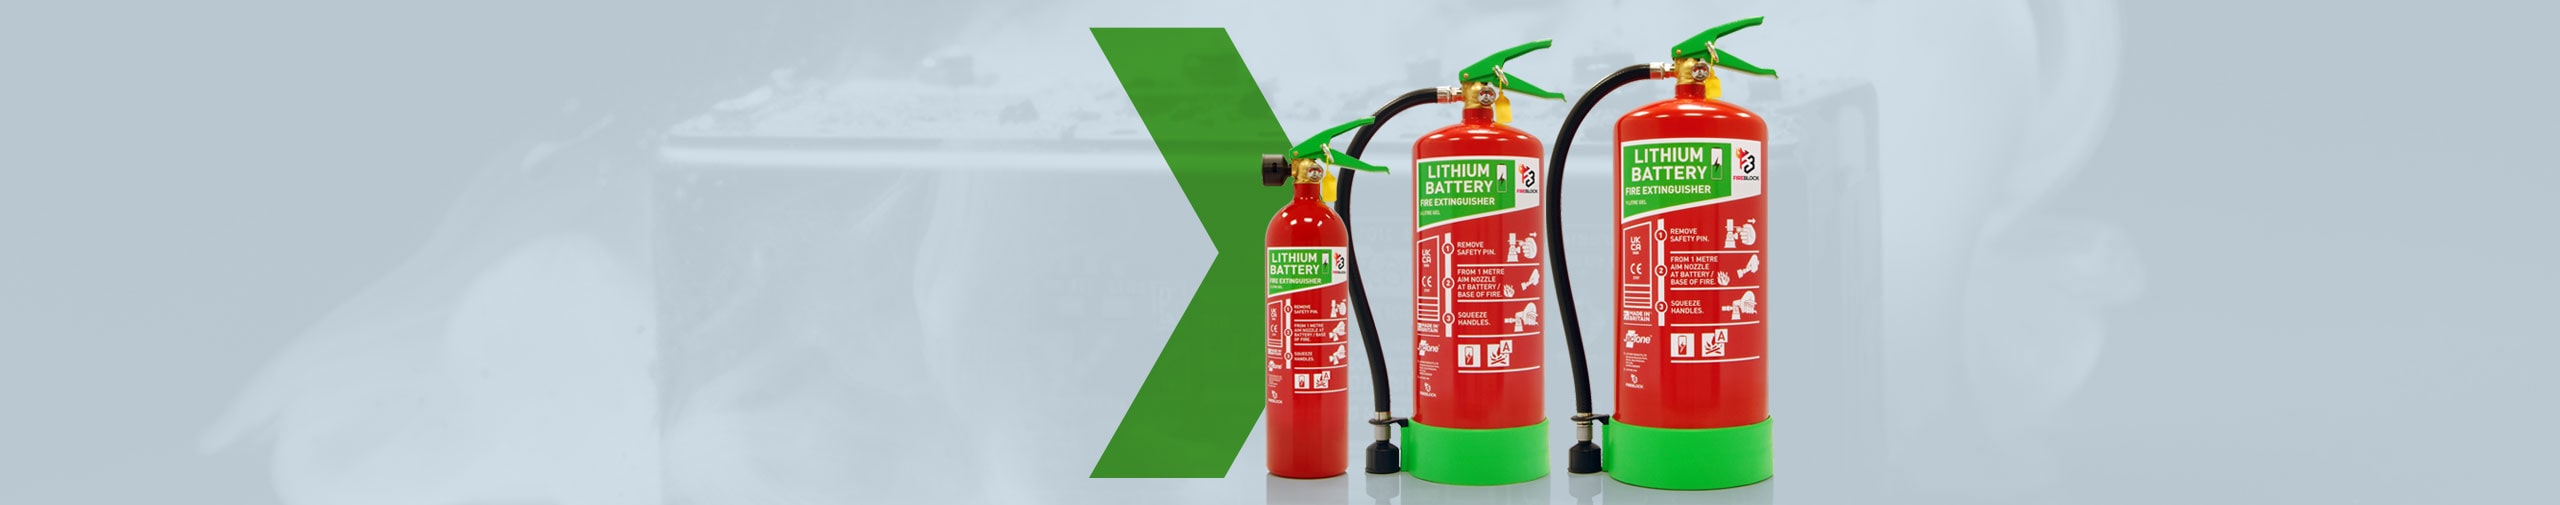 Jactone Lithium Battery Fire Extinguishers using FIREBLOCK Lithium Gel